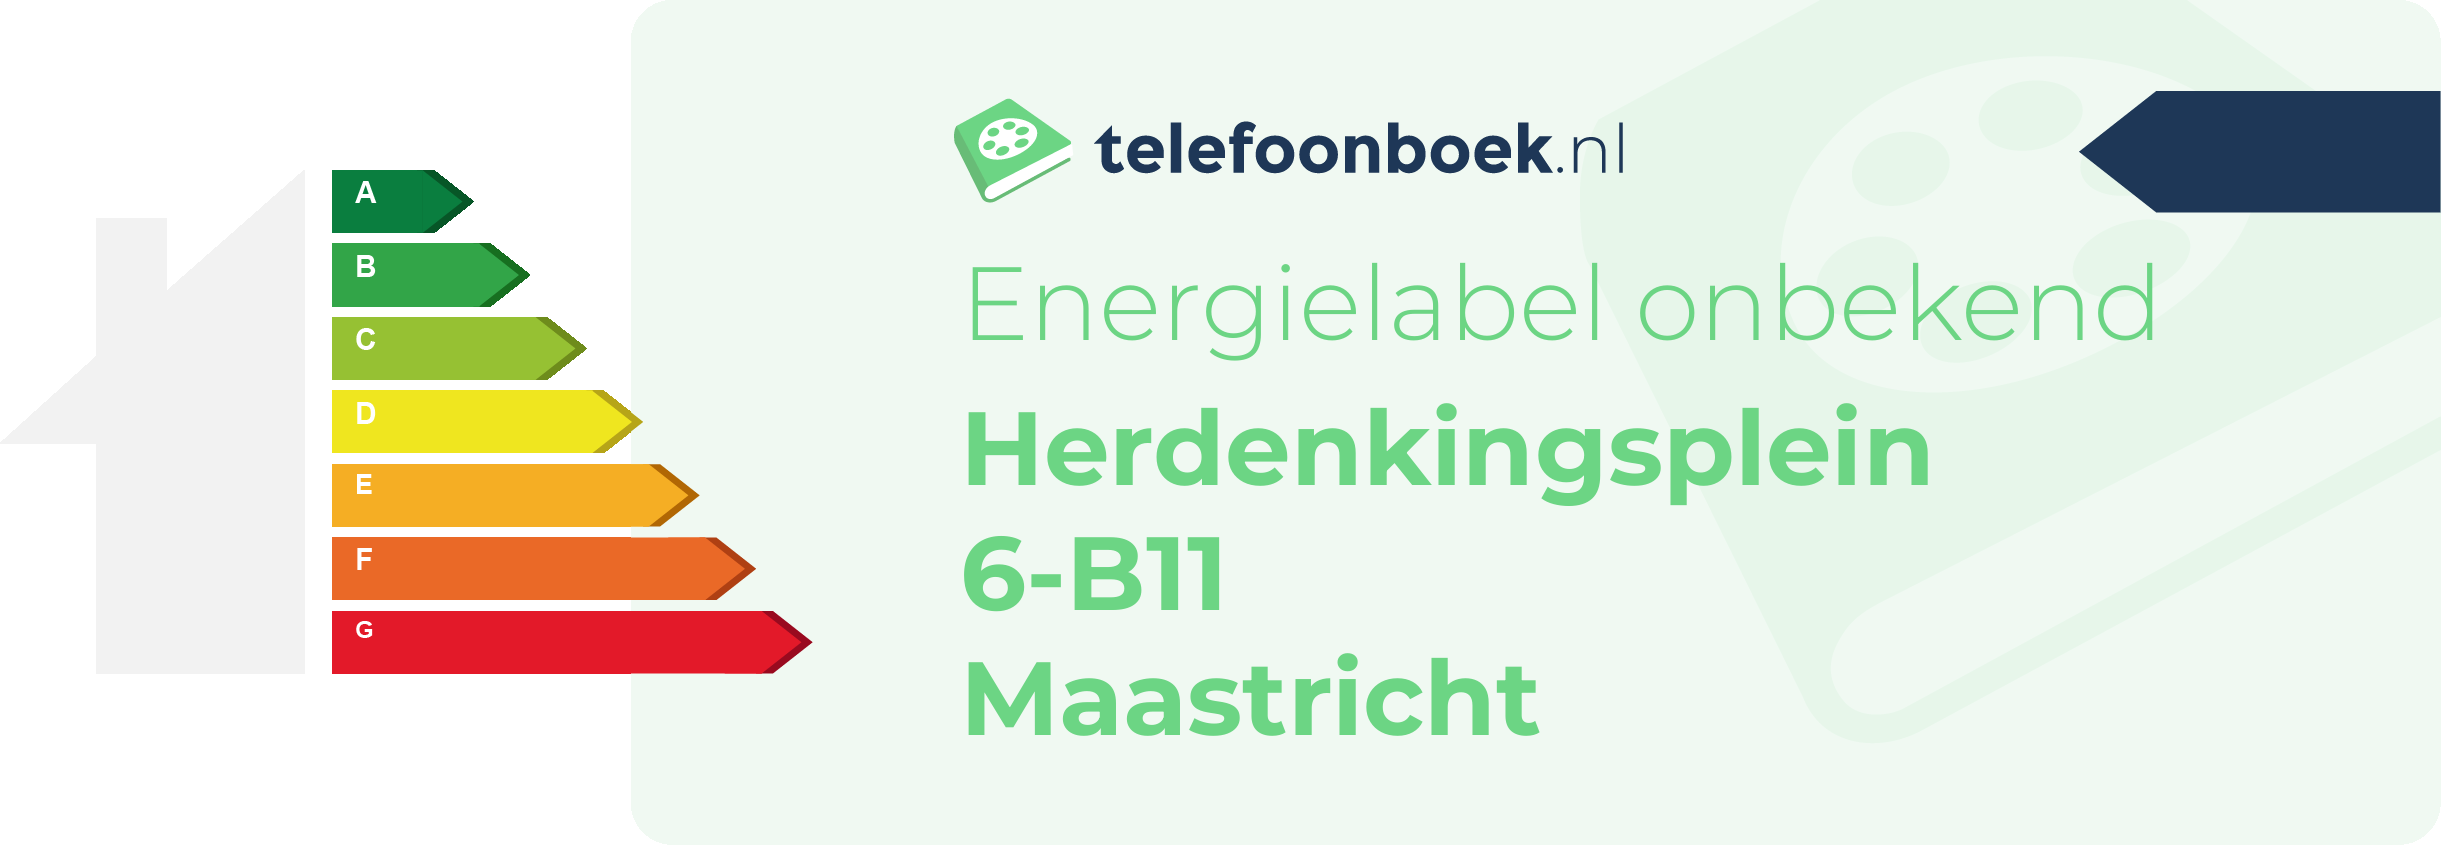 Energielabel Herdenkingsplein 6-B11 Maastricht